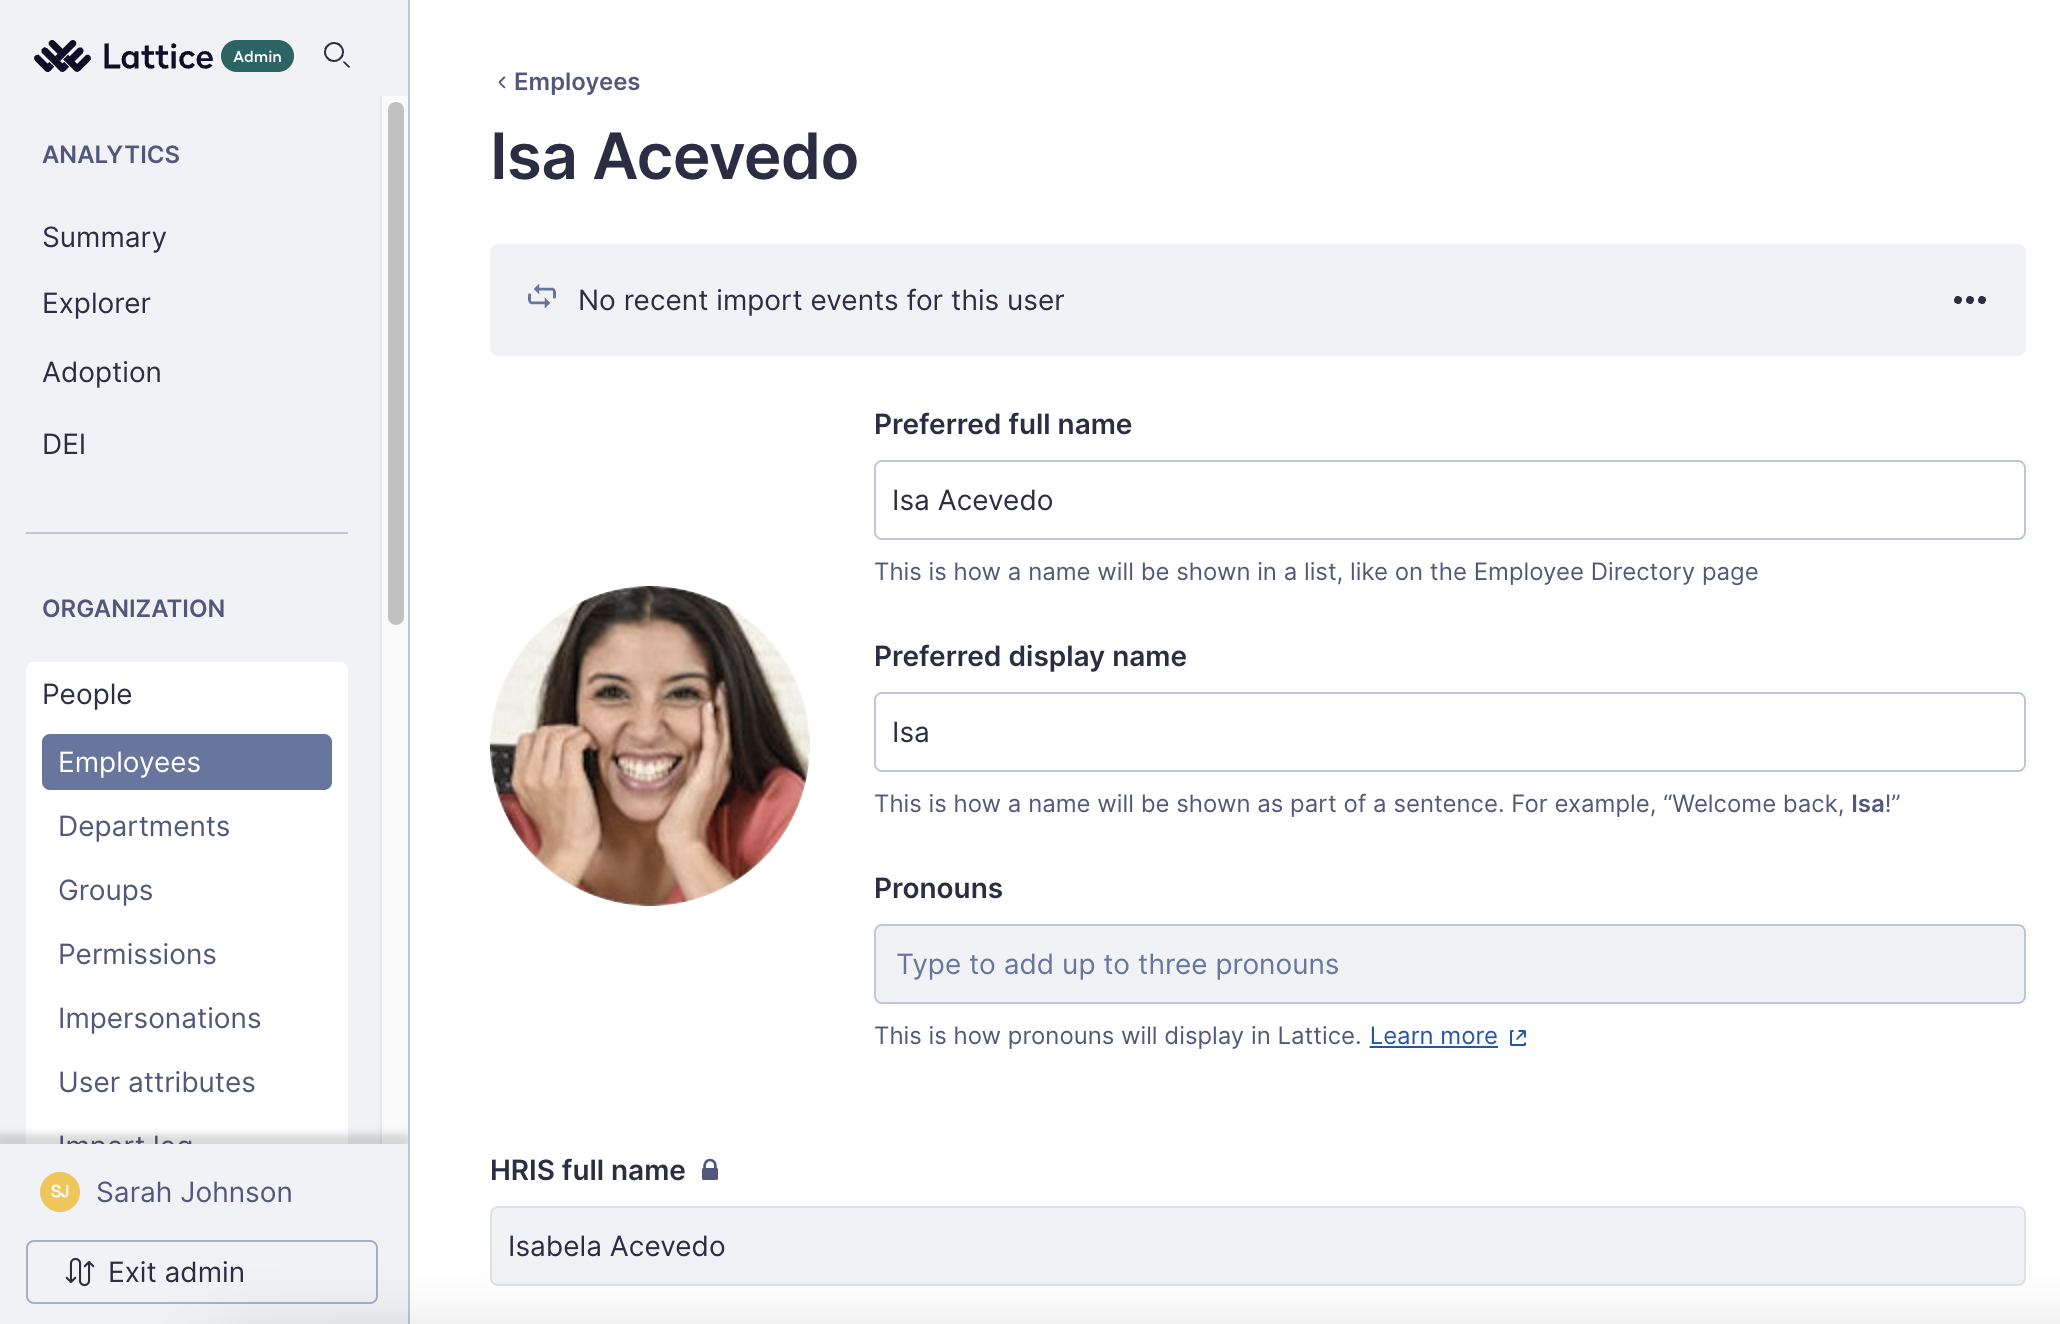 Admin view of employee profile, showing employee's name as Isa Acevedo. Preferred Full Name is set to Isa Acevedo, Preferred Display Name is Isa, and HRIS Full Name is Isabela Acevedo.